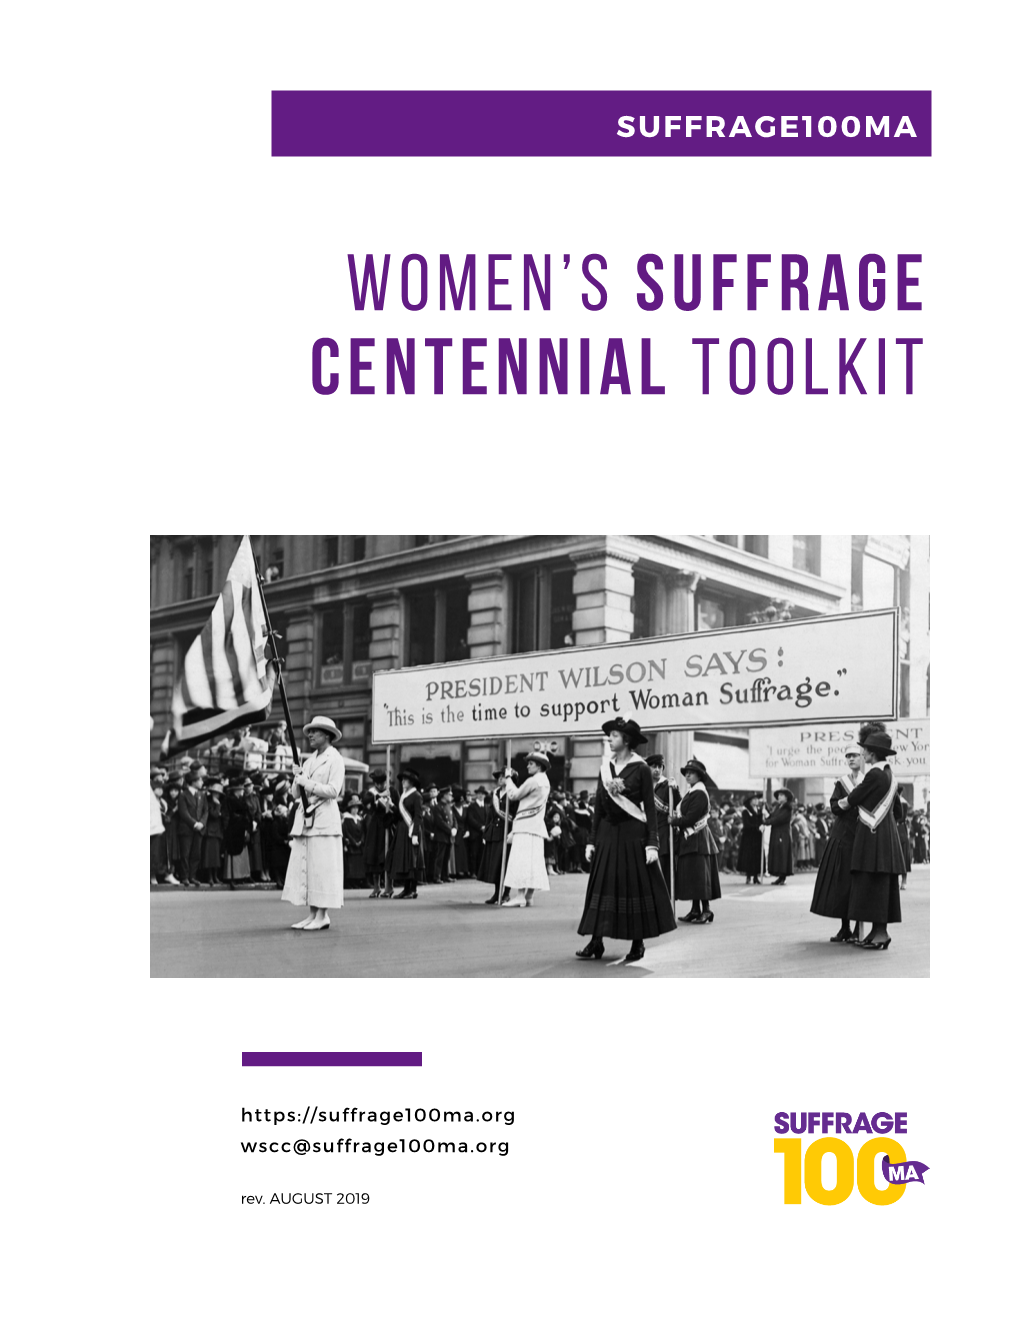 Suffrage Centennial Toolkit